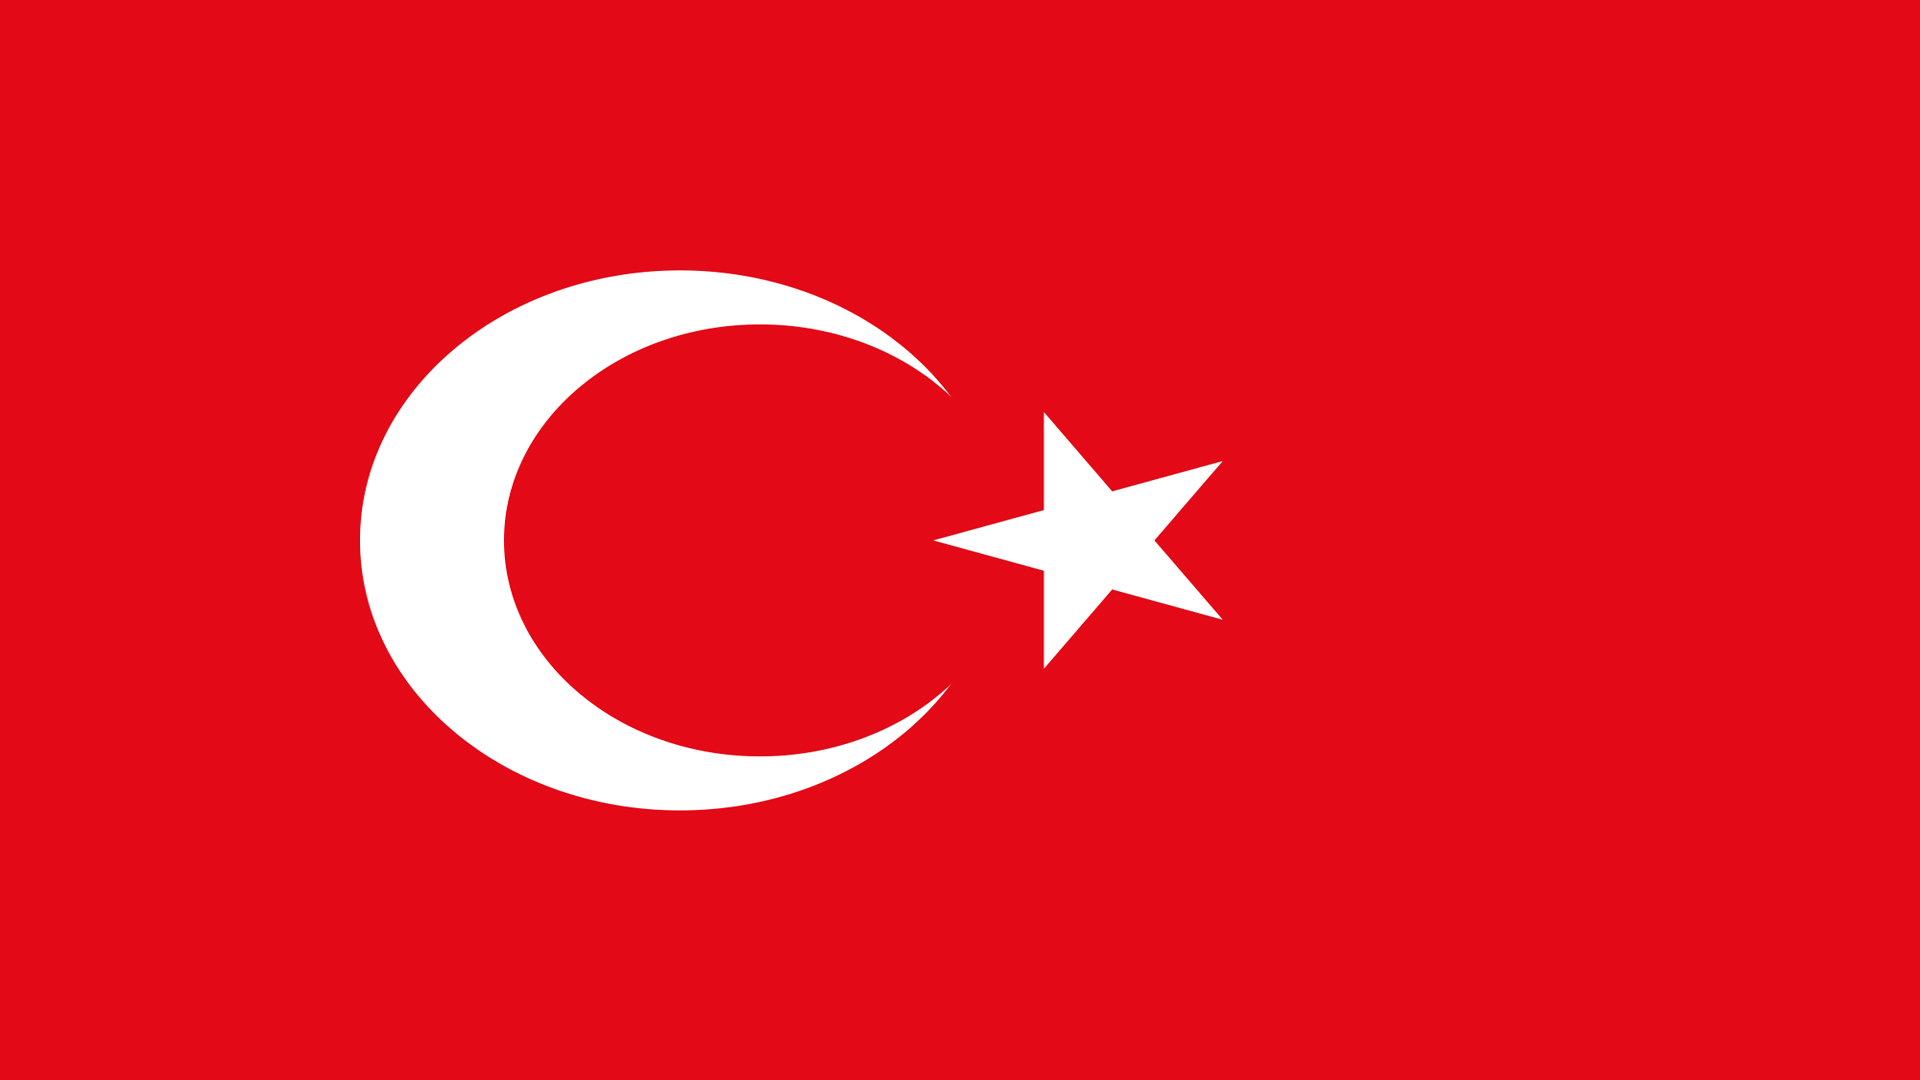 Turkey Flag - Wallpaper, High Definition, High Quality ...